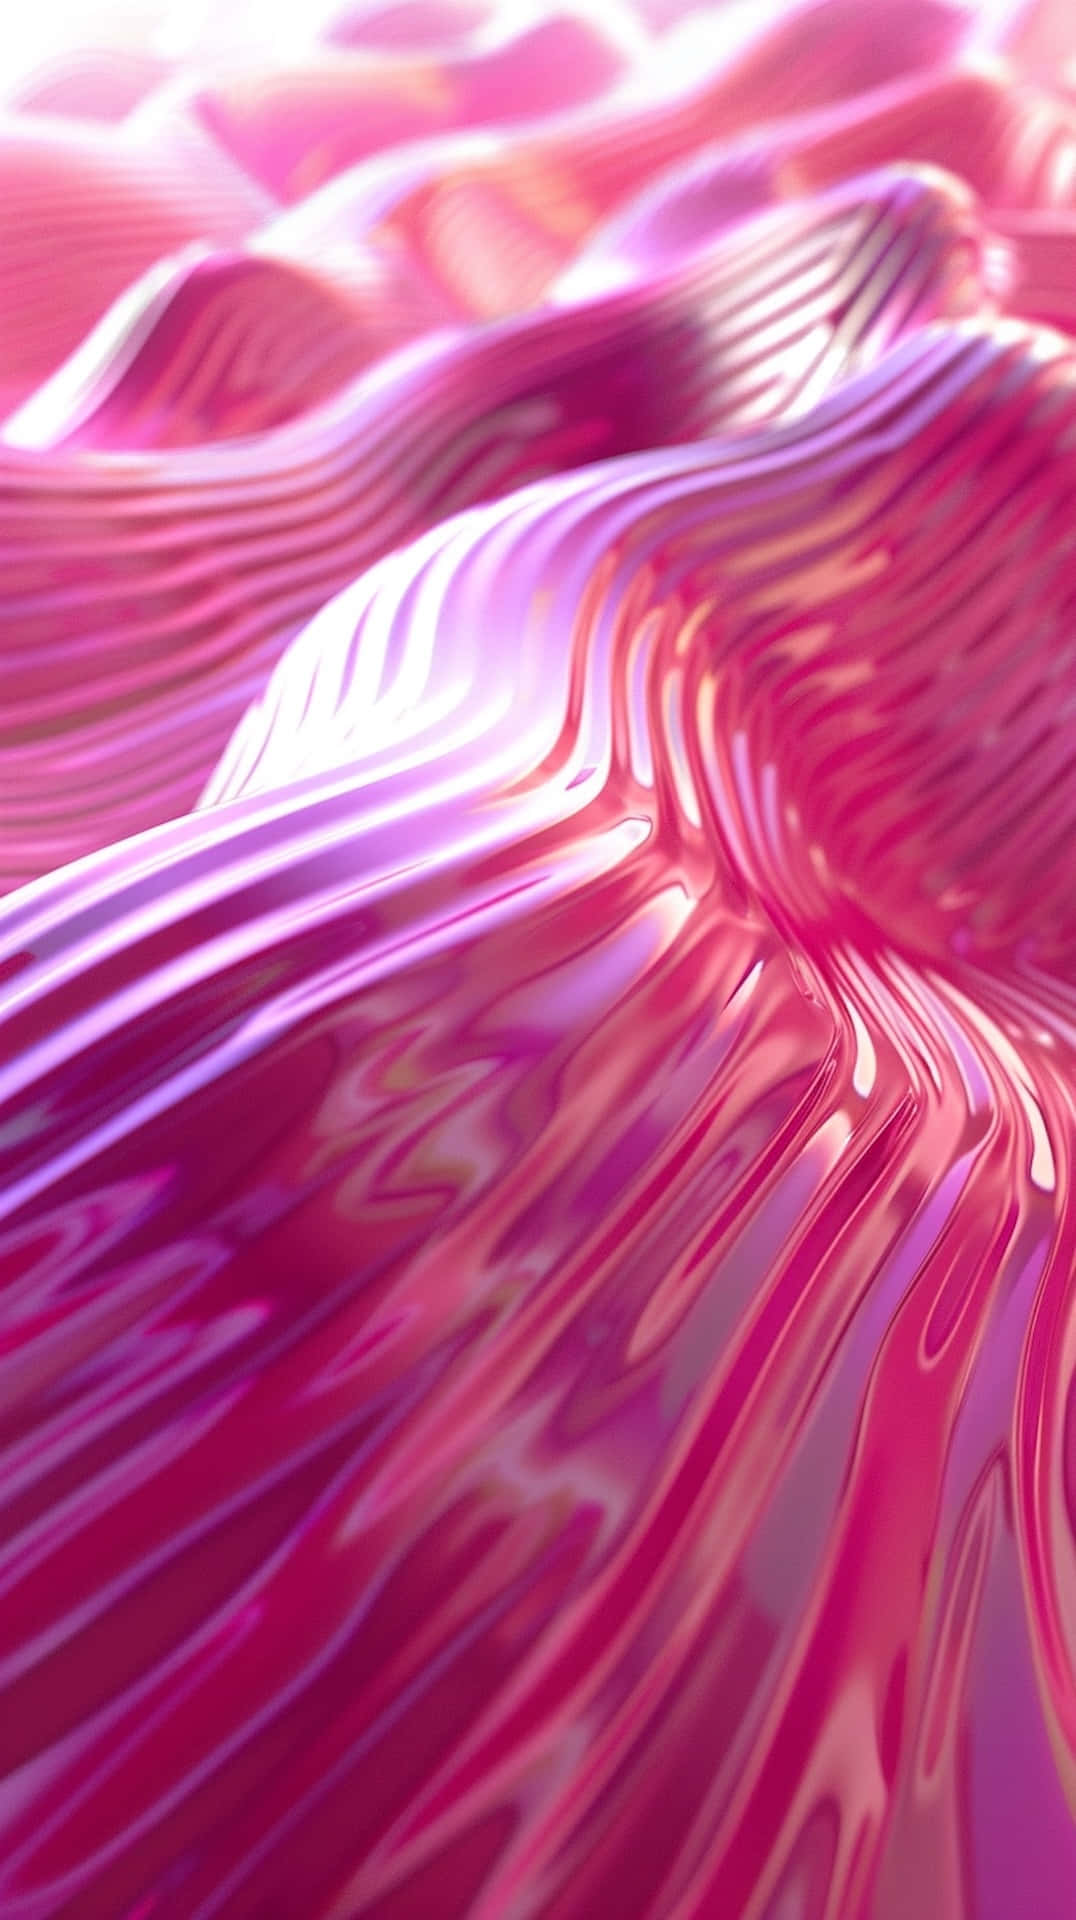 Abstract Pink Waves3 D Texture Wallpaper